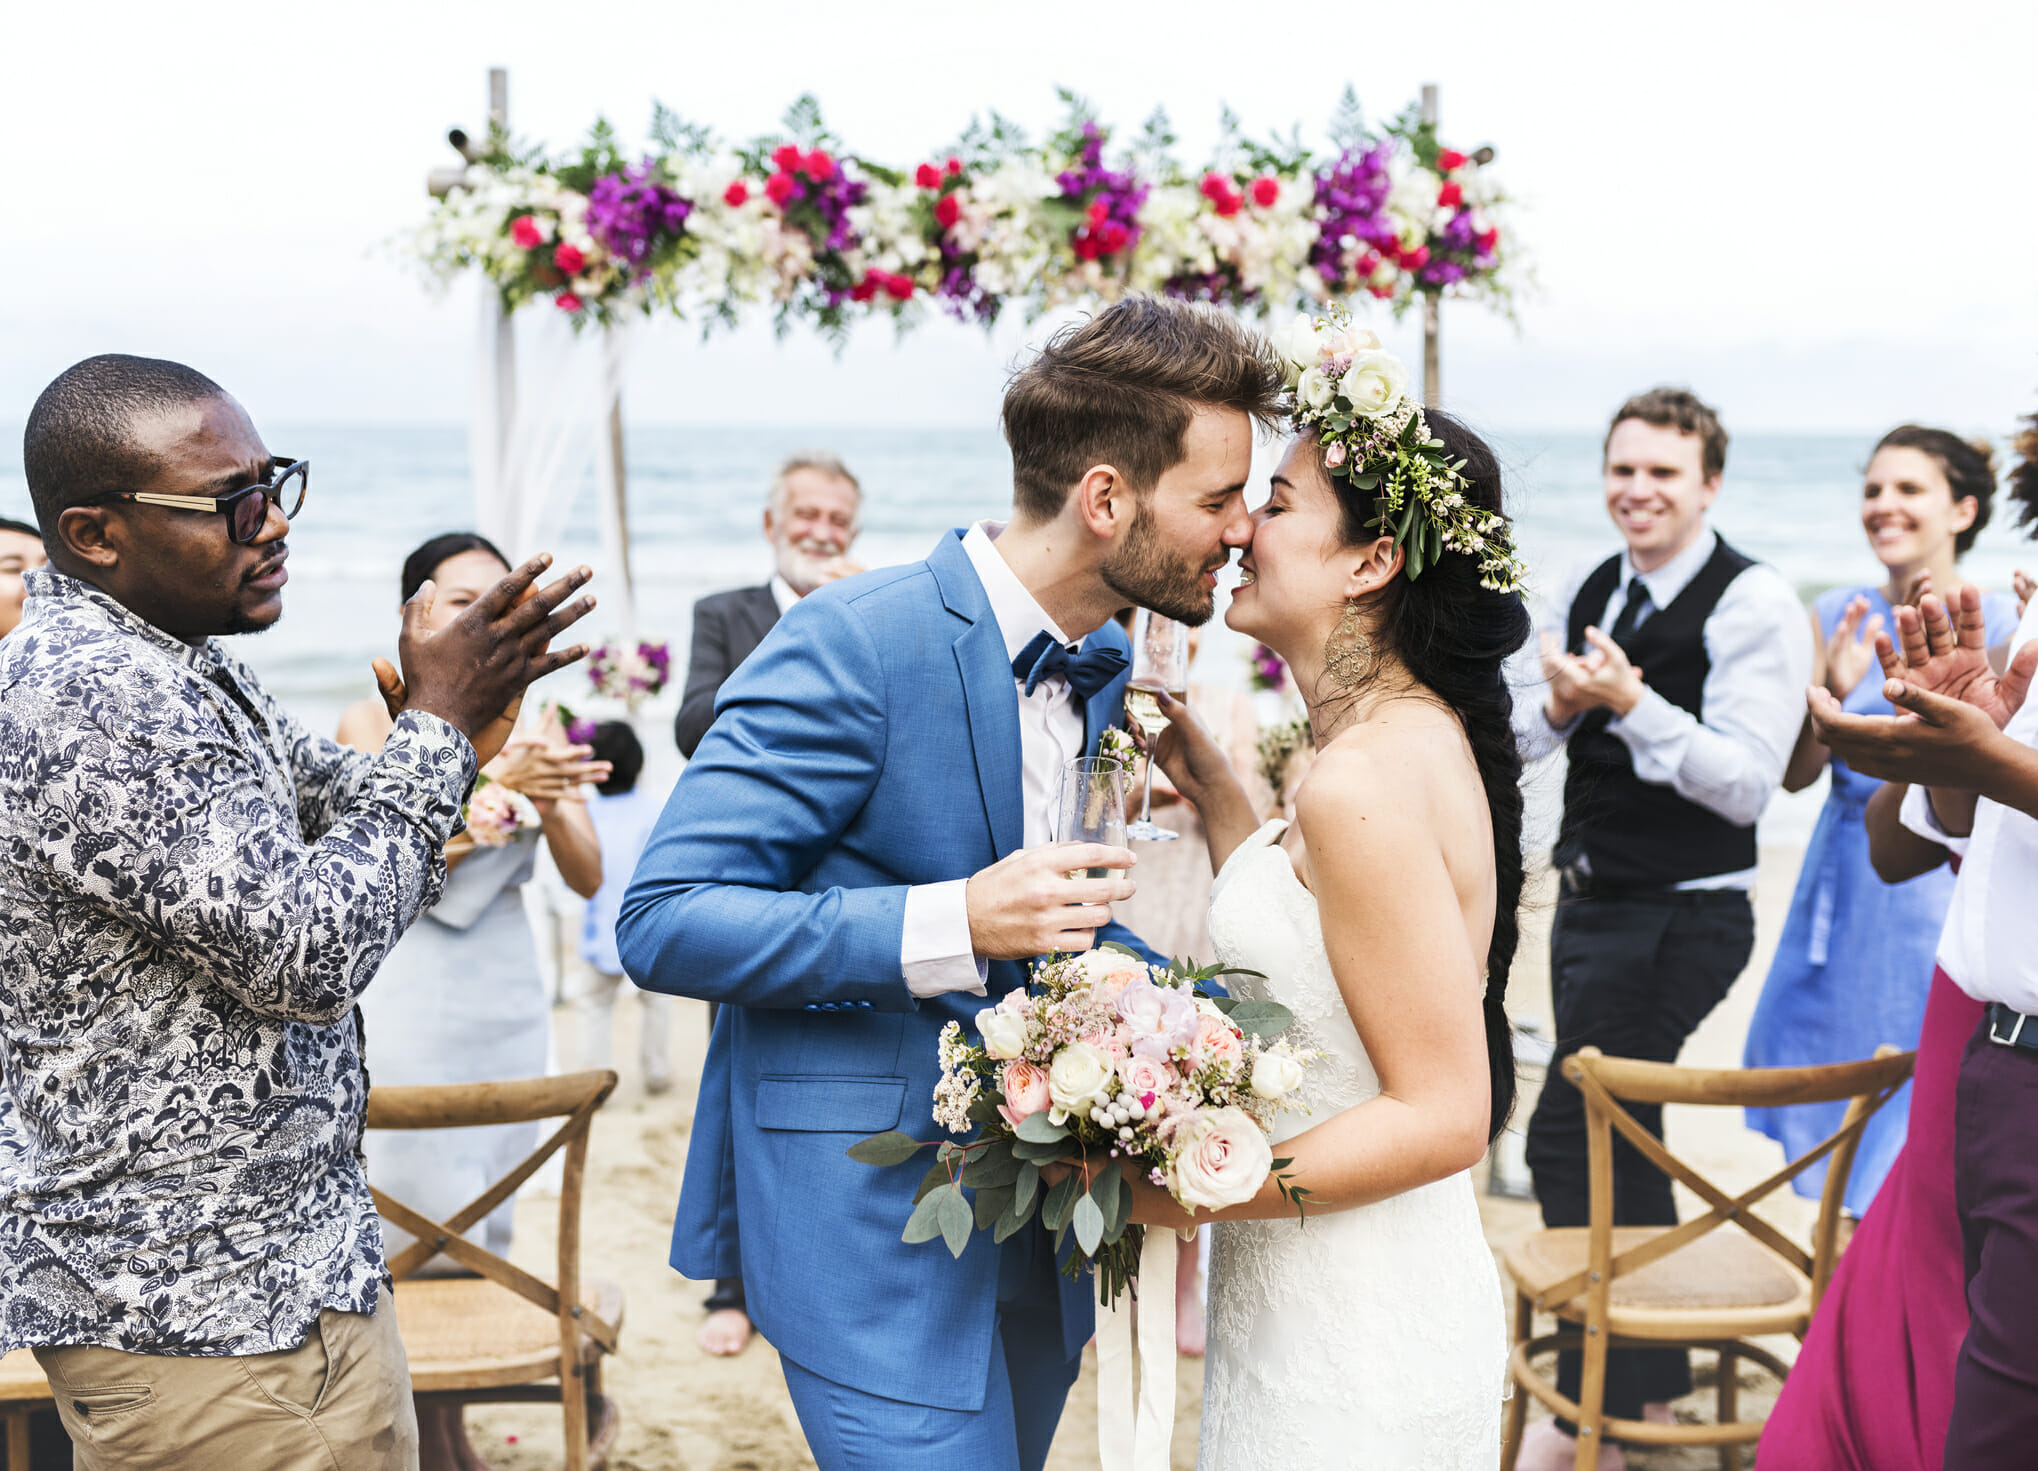 Couple kissing at a destination wedding